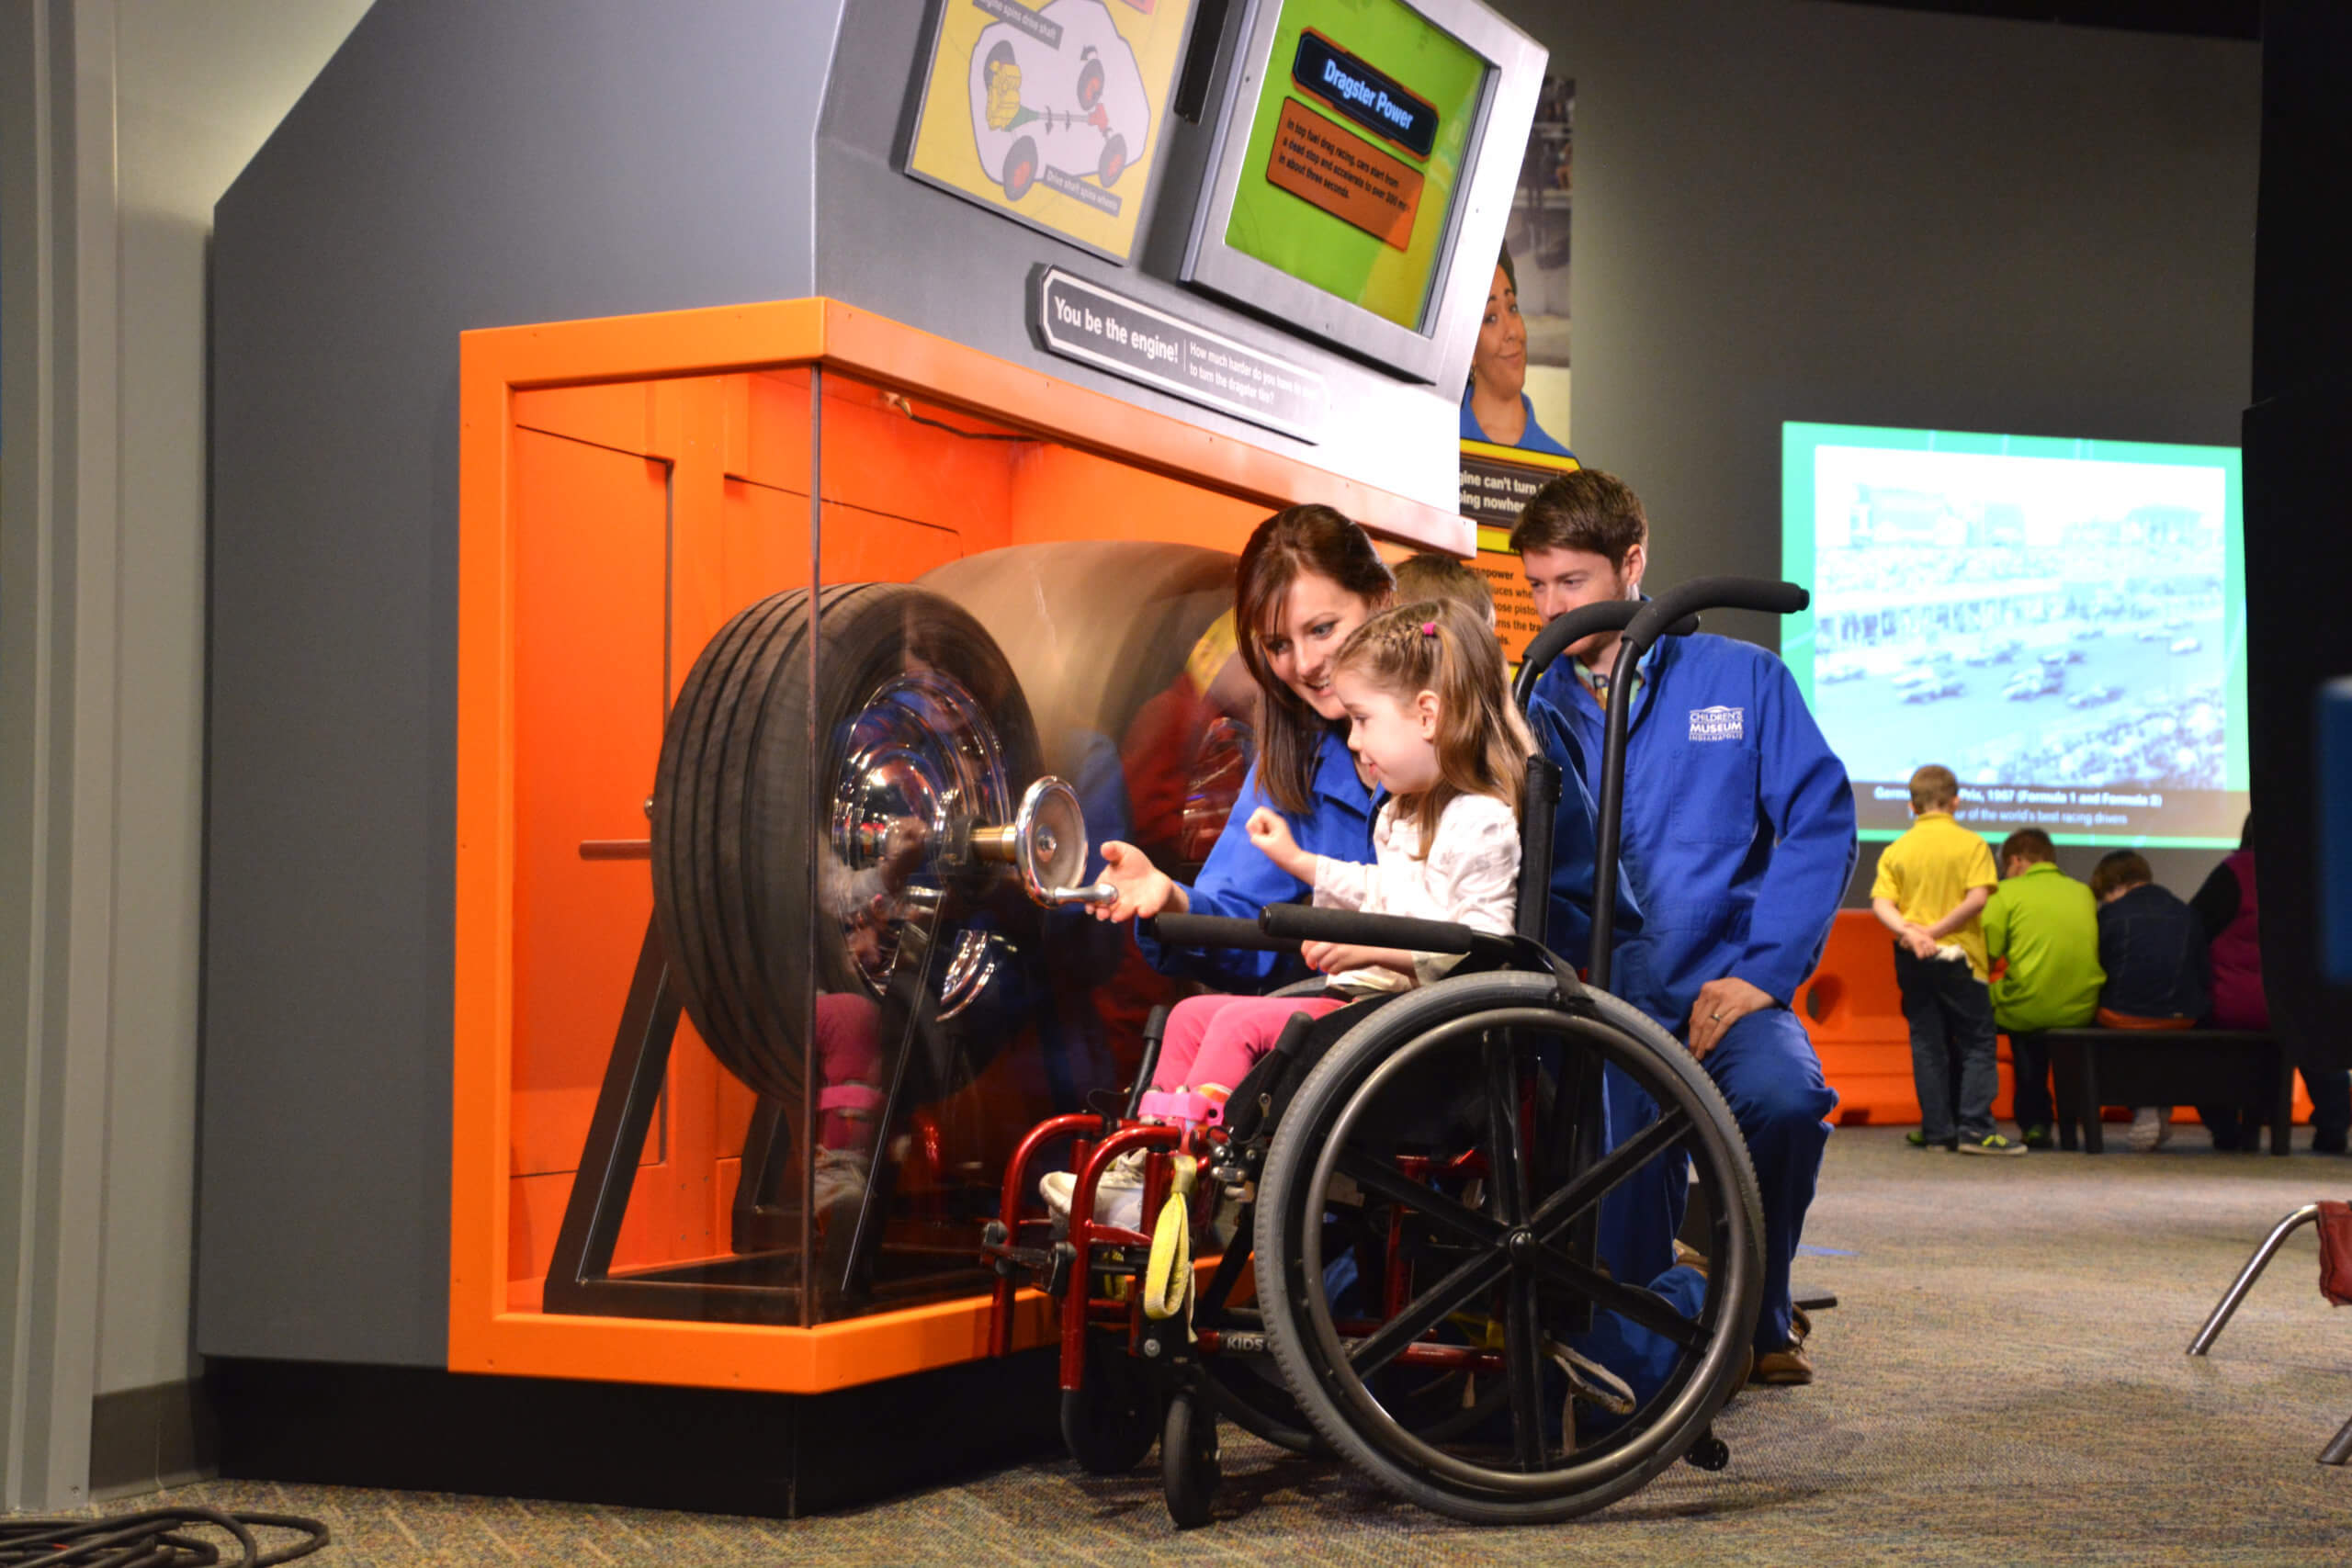 A young girl in a wheelchair turns a wheel to power a race car wheel.